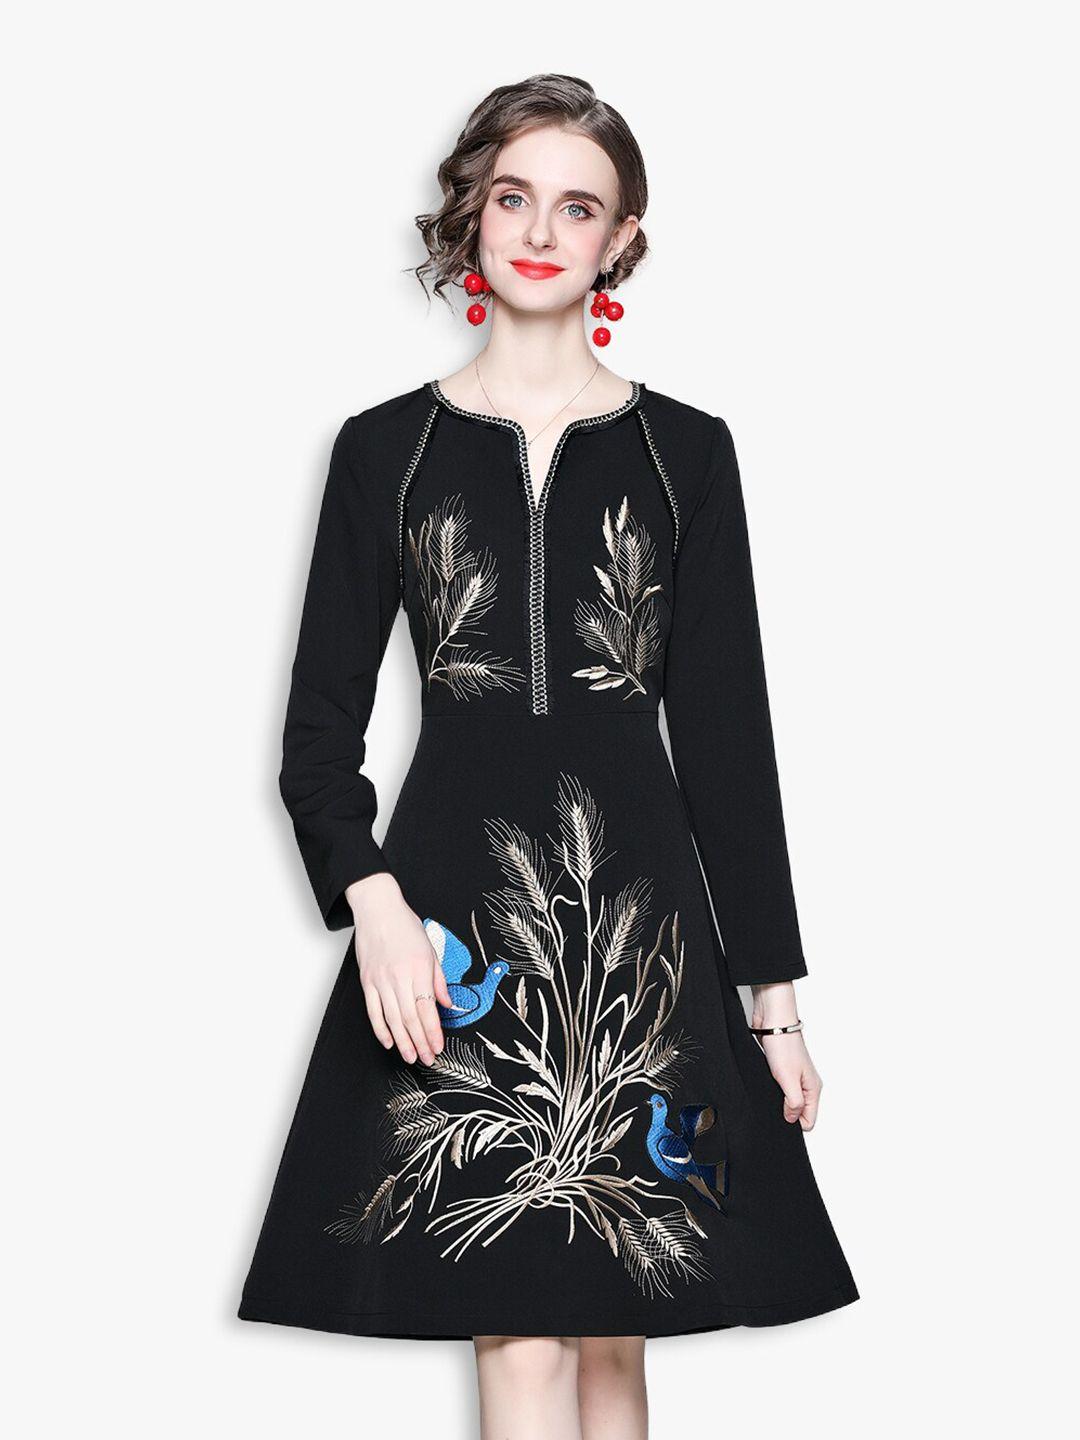 jc collection black floral dress